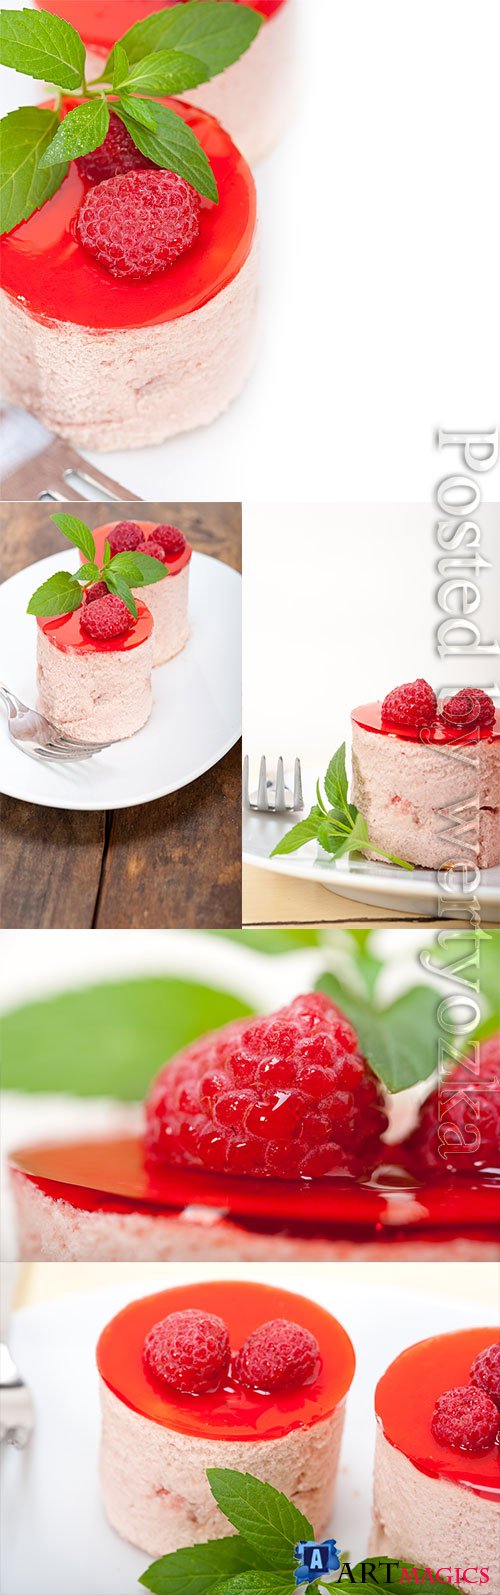 Desserts with raspberries stock photo